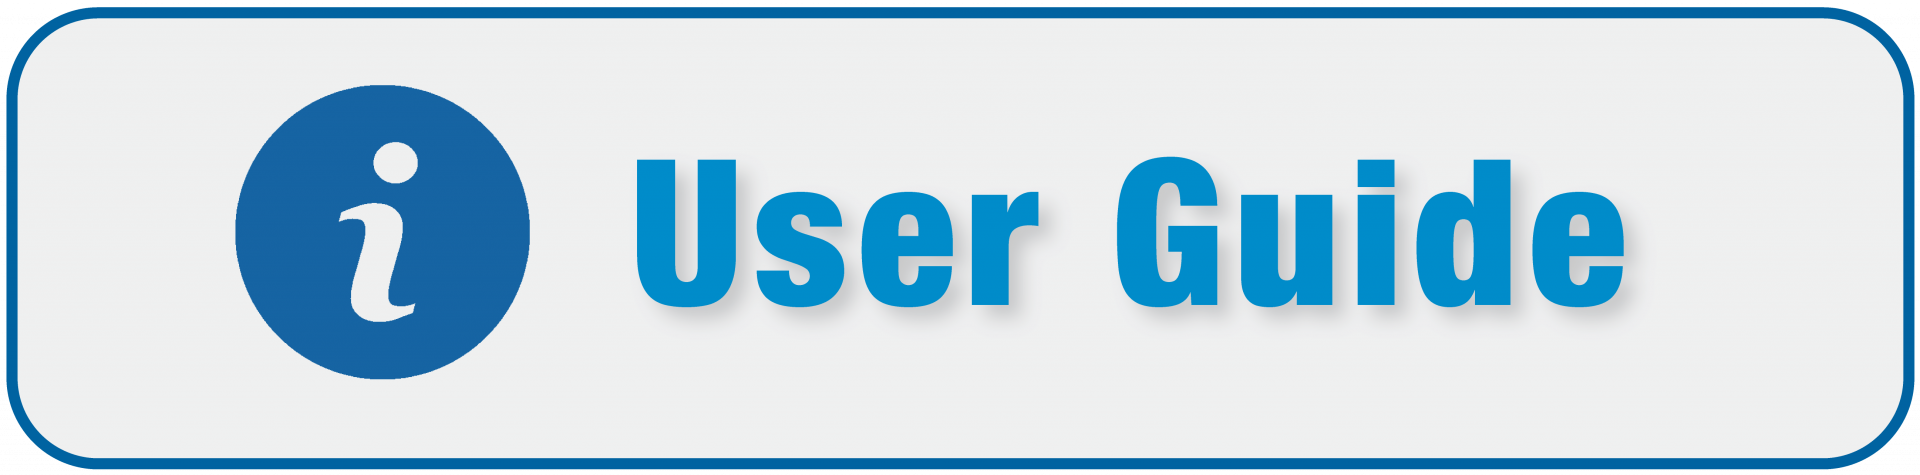 user-guide_eng